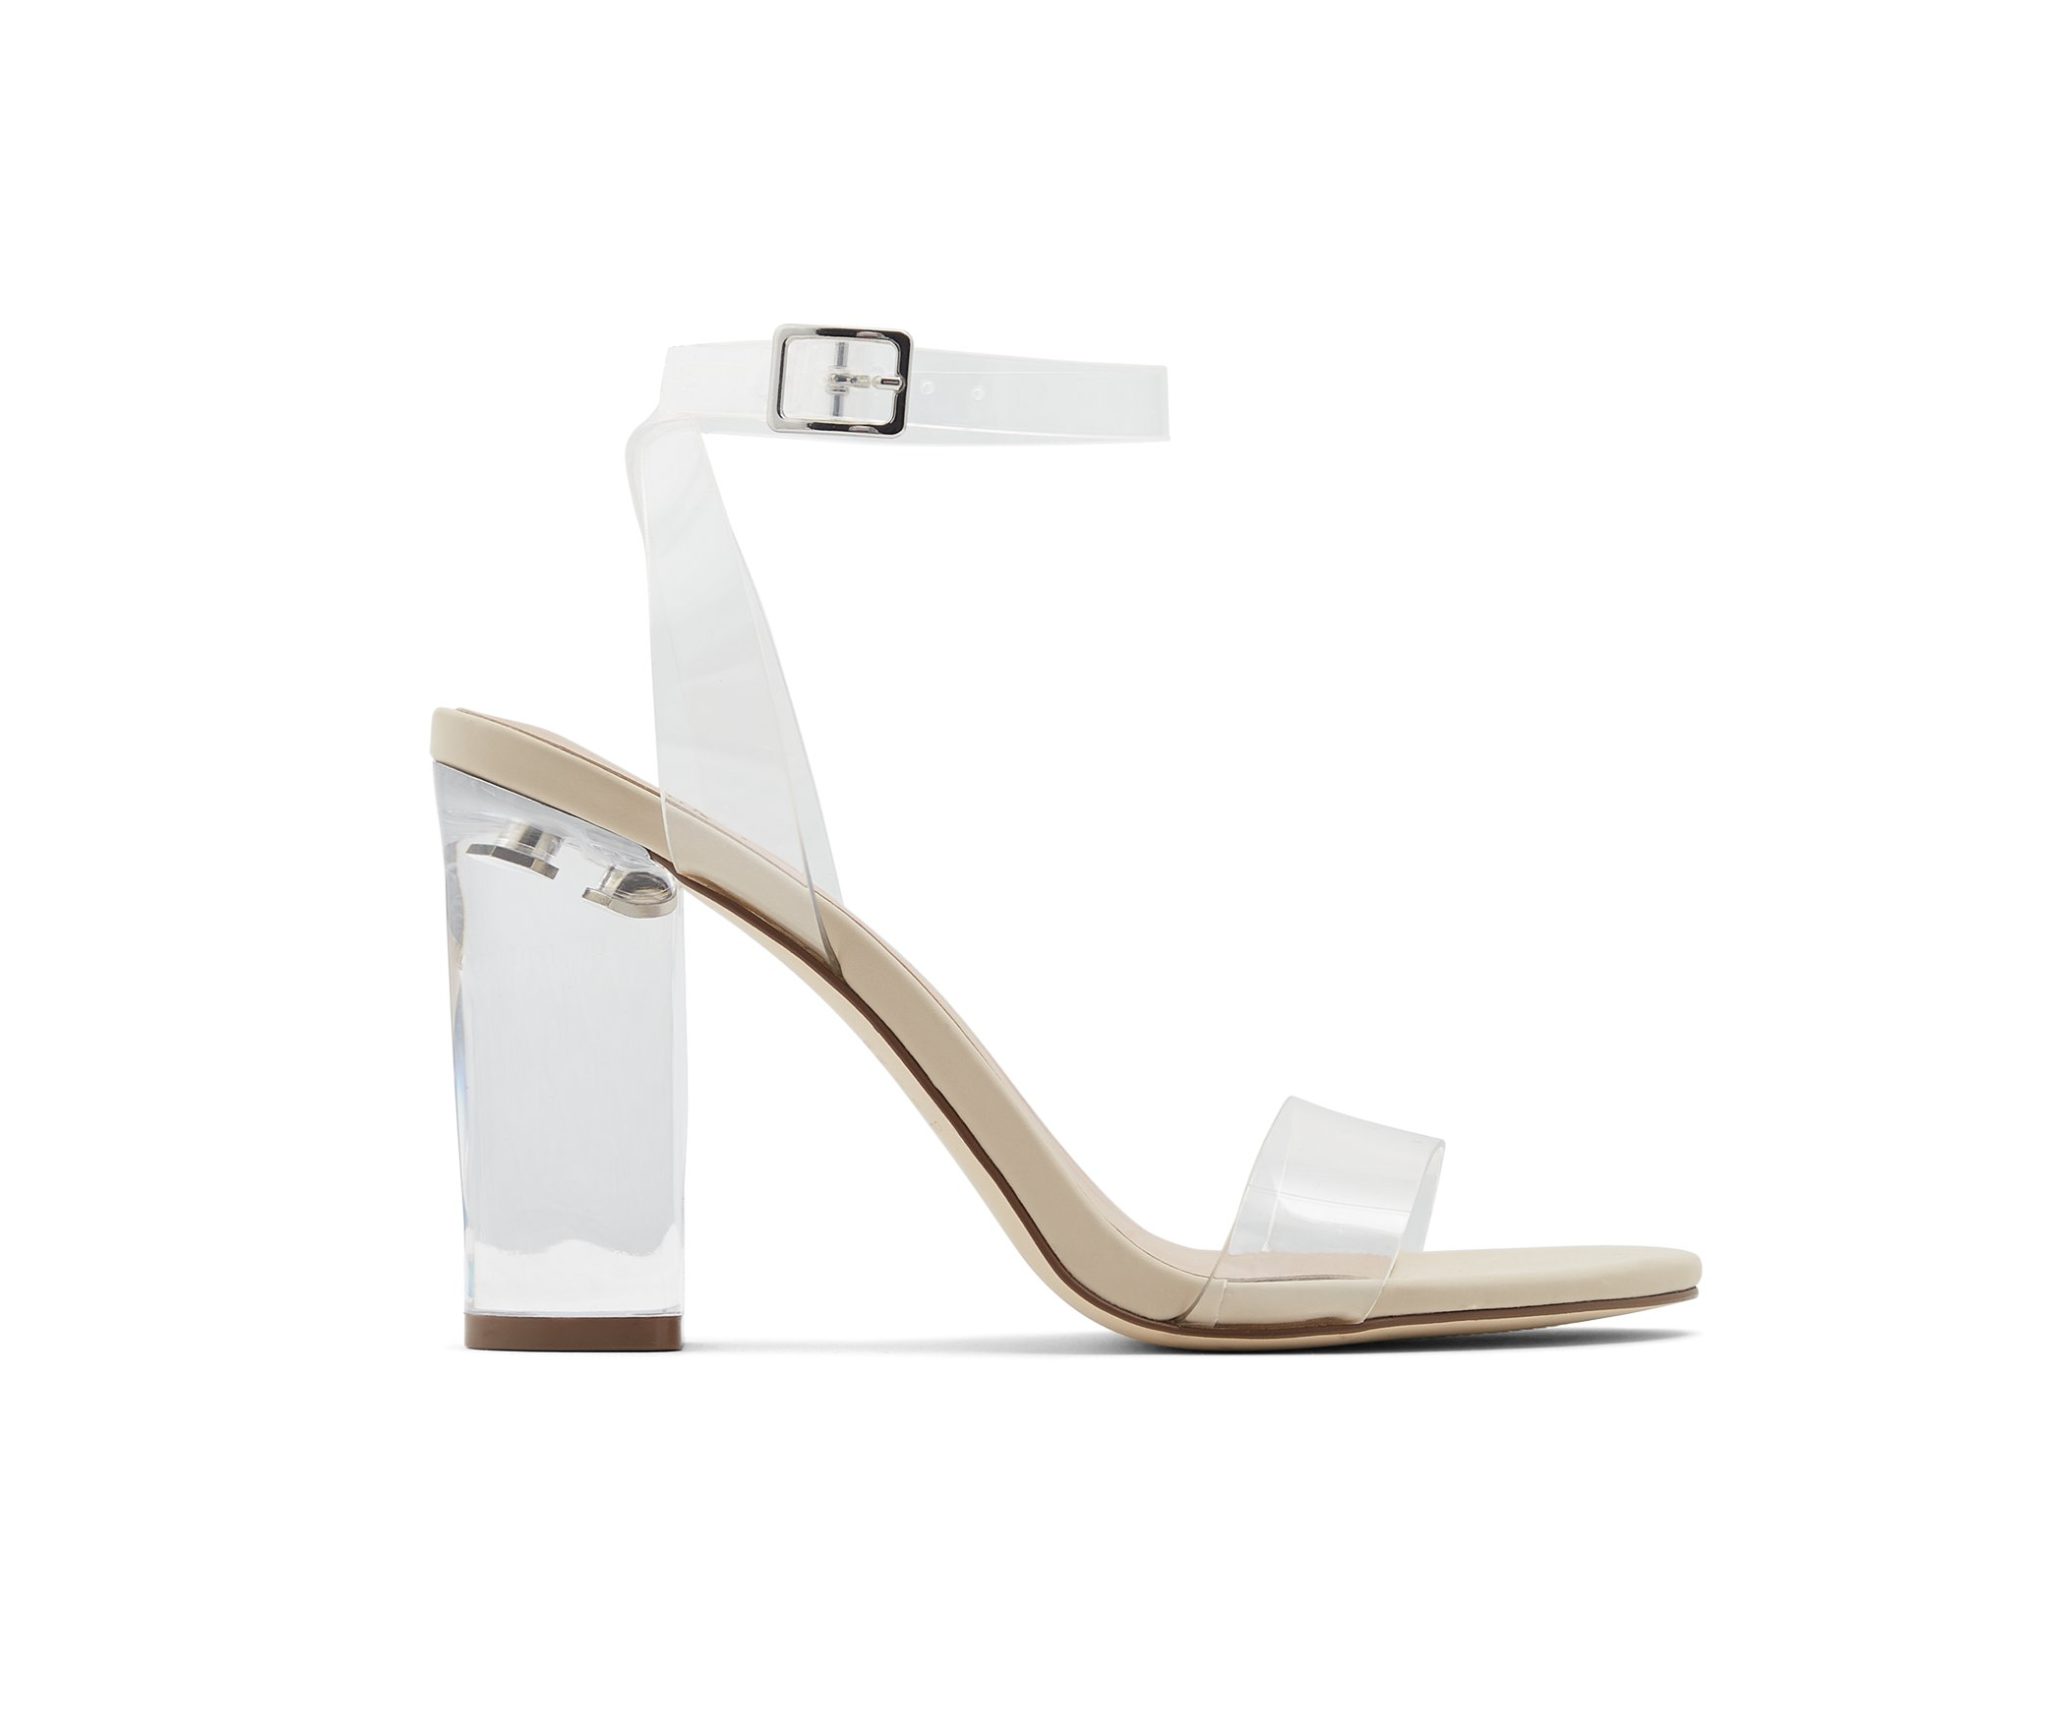 Stunning block heel Wedding Shoe for the Fashionable Bride